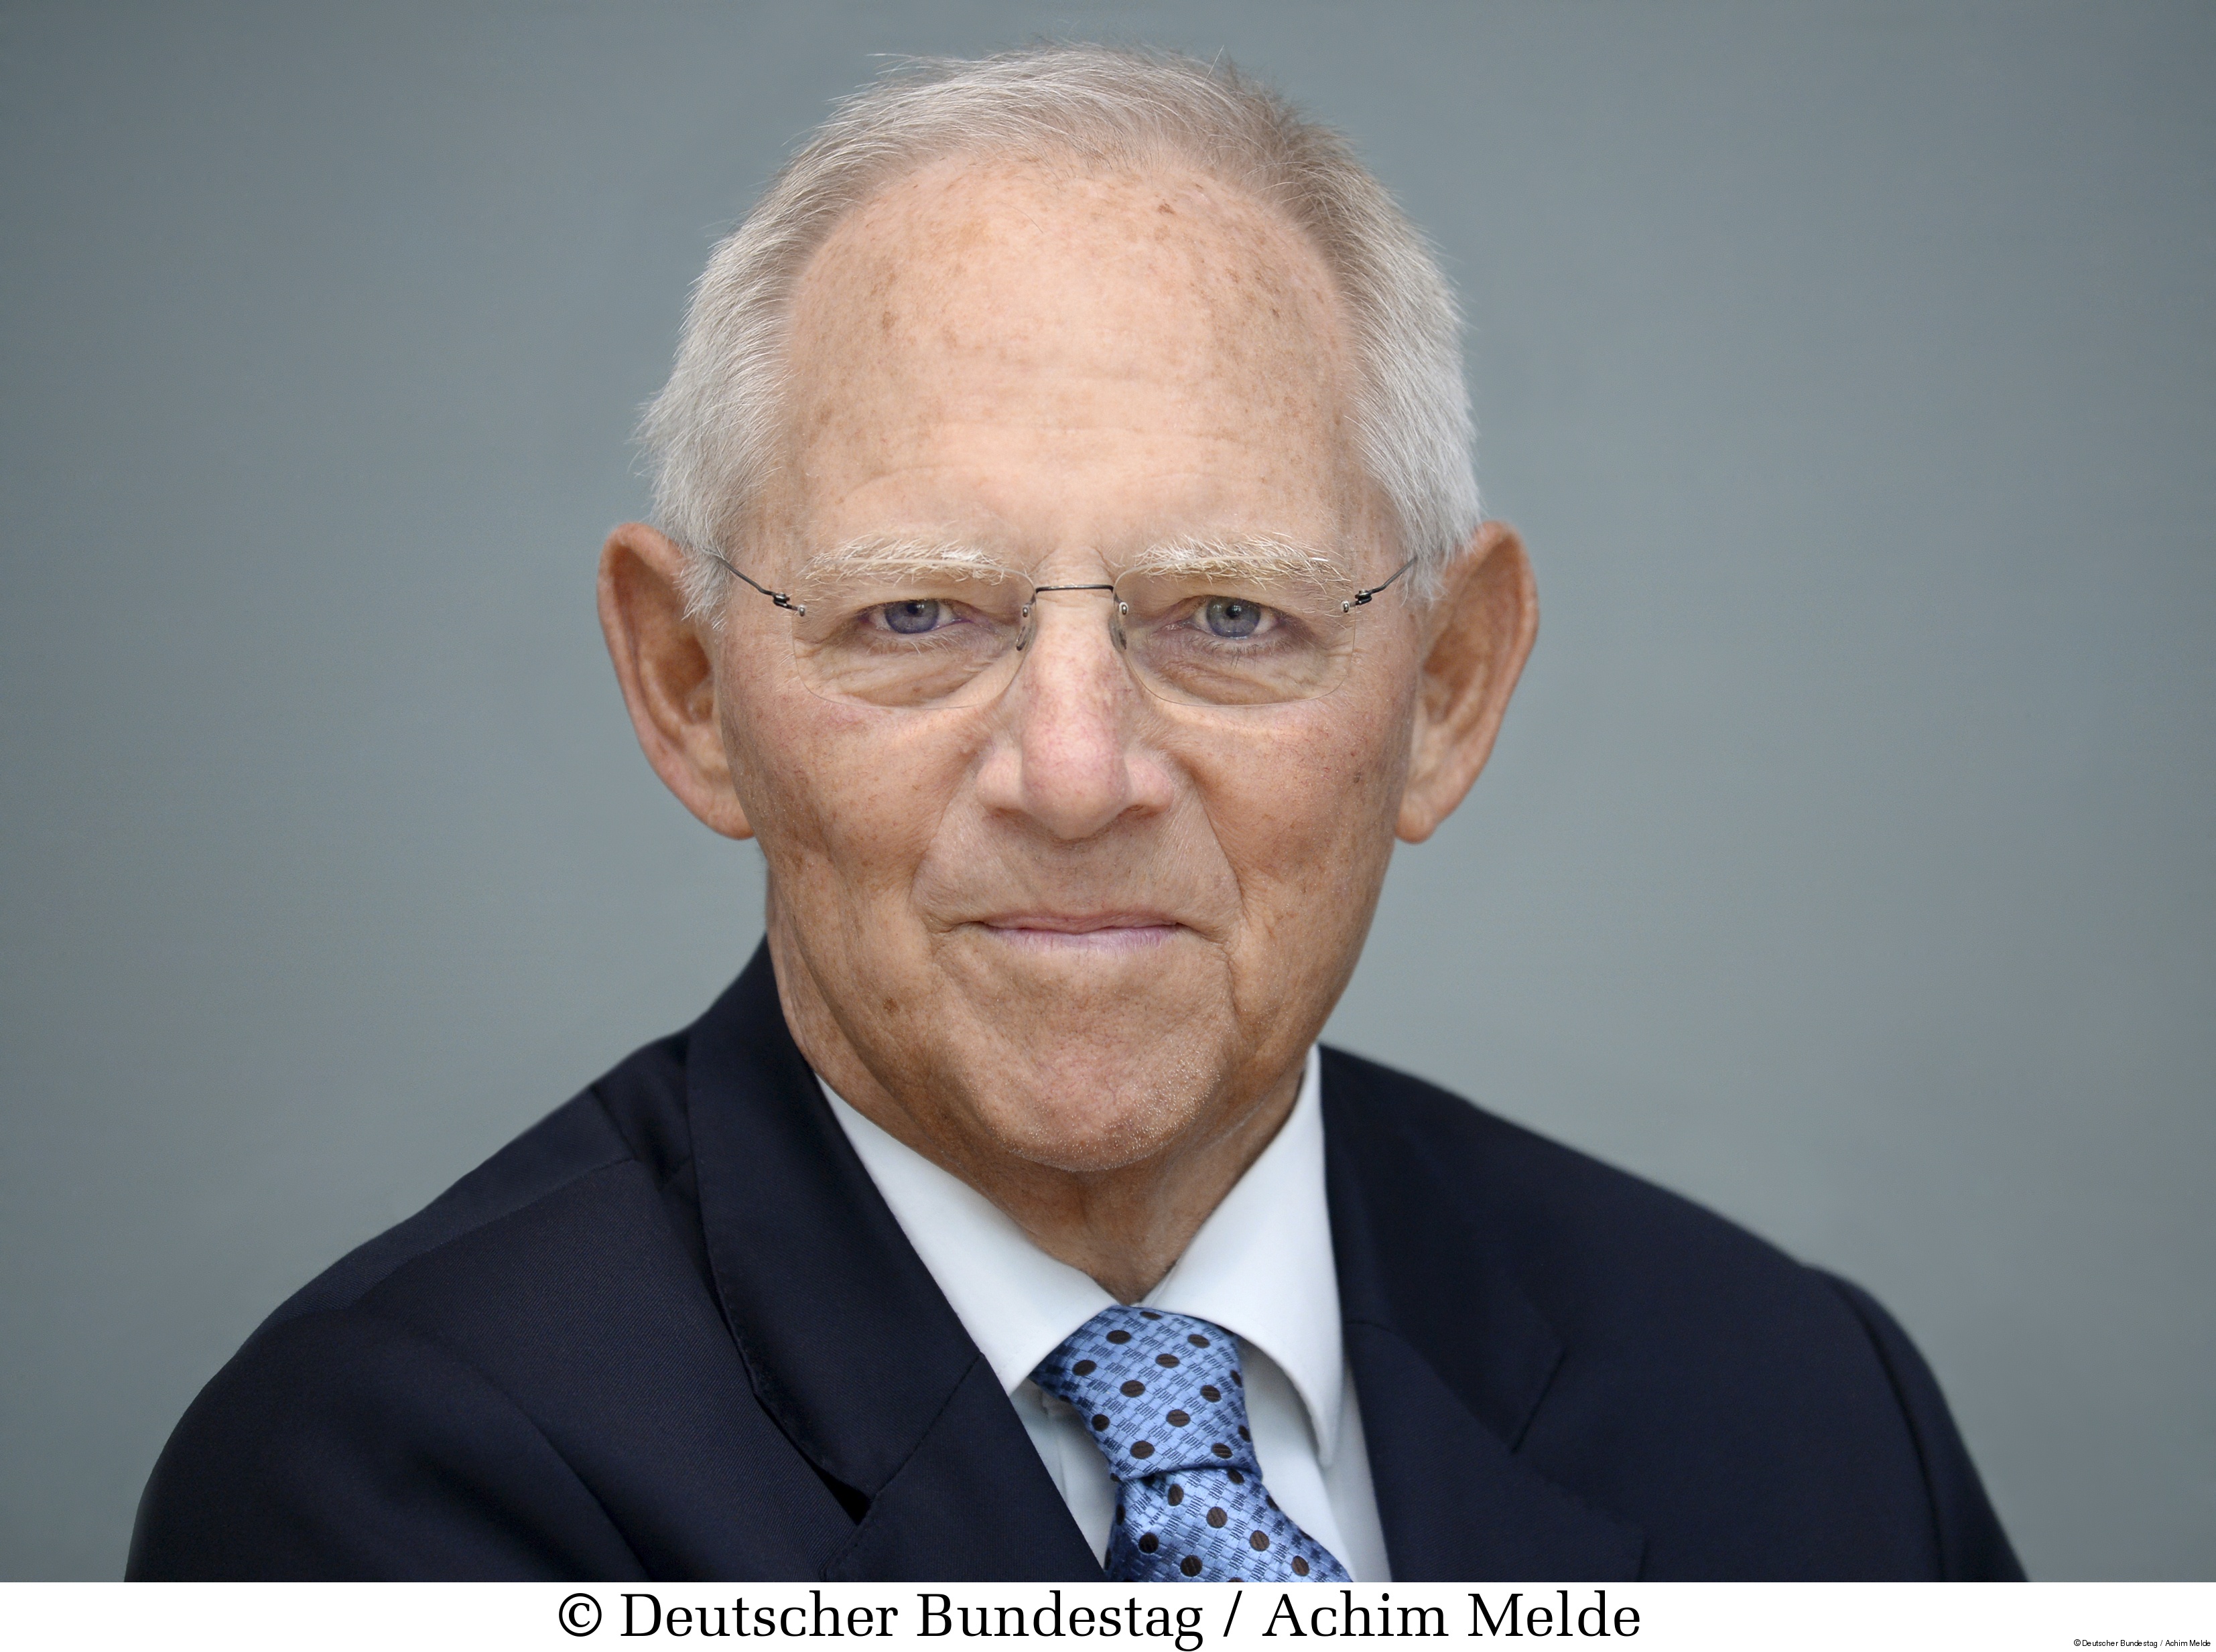 Bundestagspräsident Dr. Wolfgang Schäuble, CDU/CSU, MdB. Präsident, Bundestagsabgeordneter, Abgeordneter